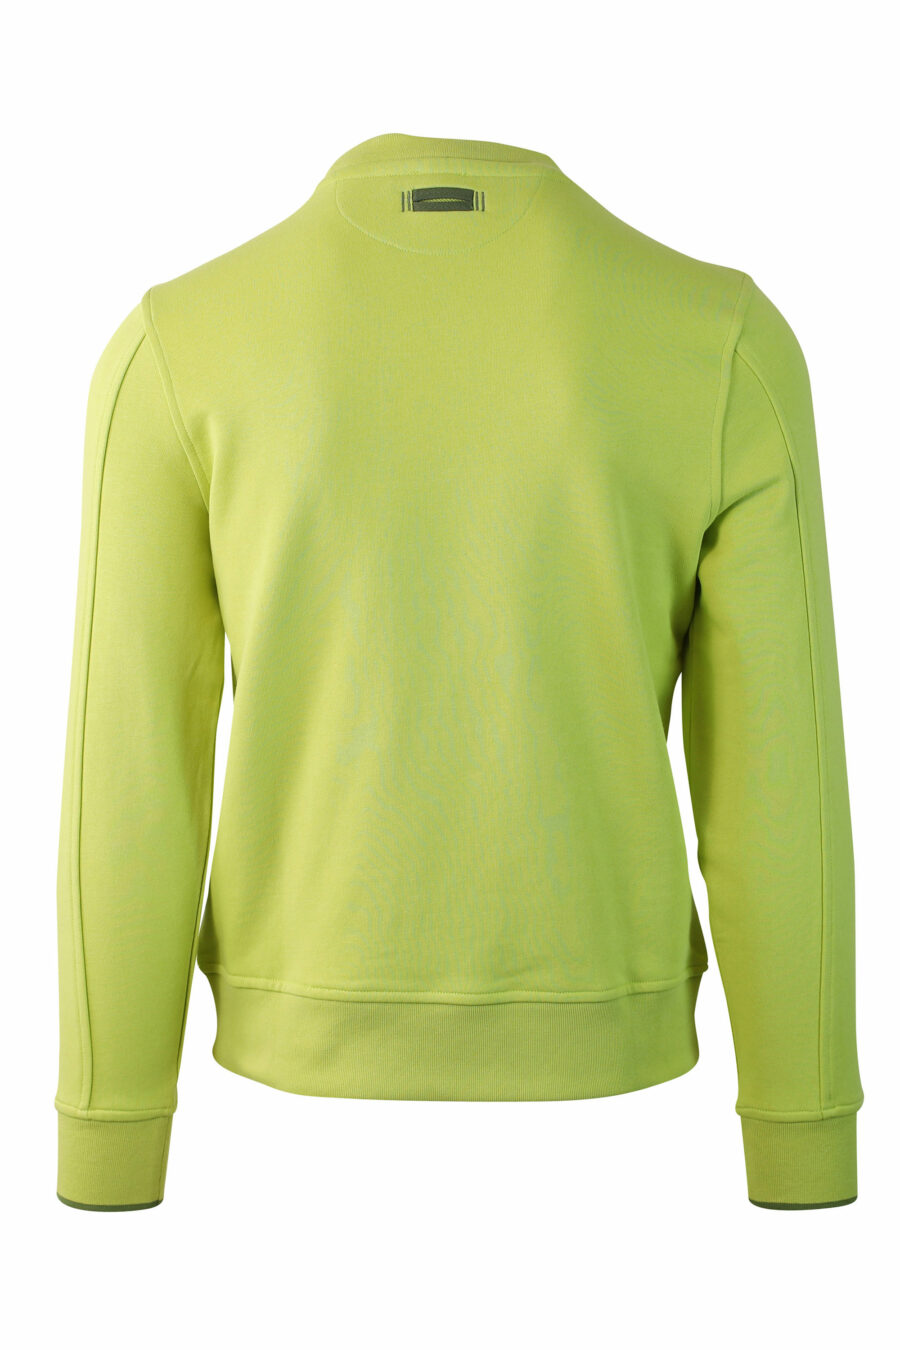 Limonengrünes Sweatshirt mit einfarbigem Samt-Maxilogue - IMG 0075 1